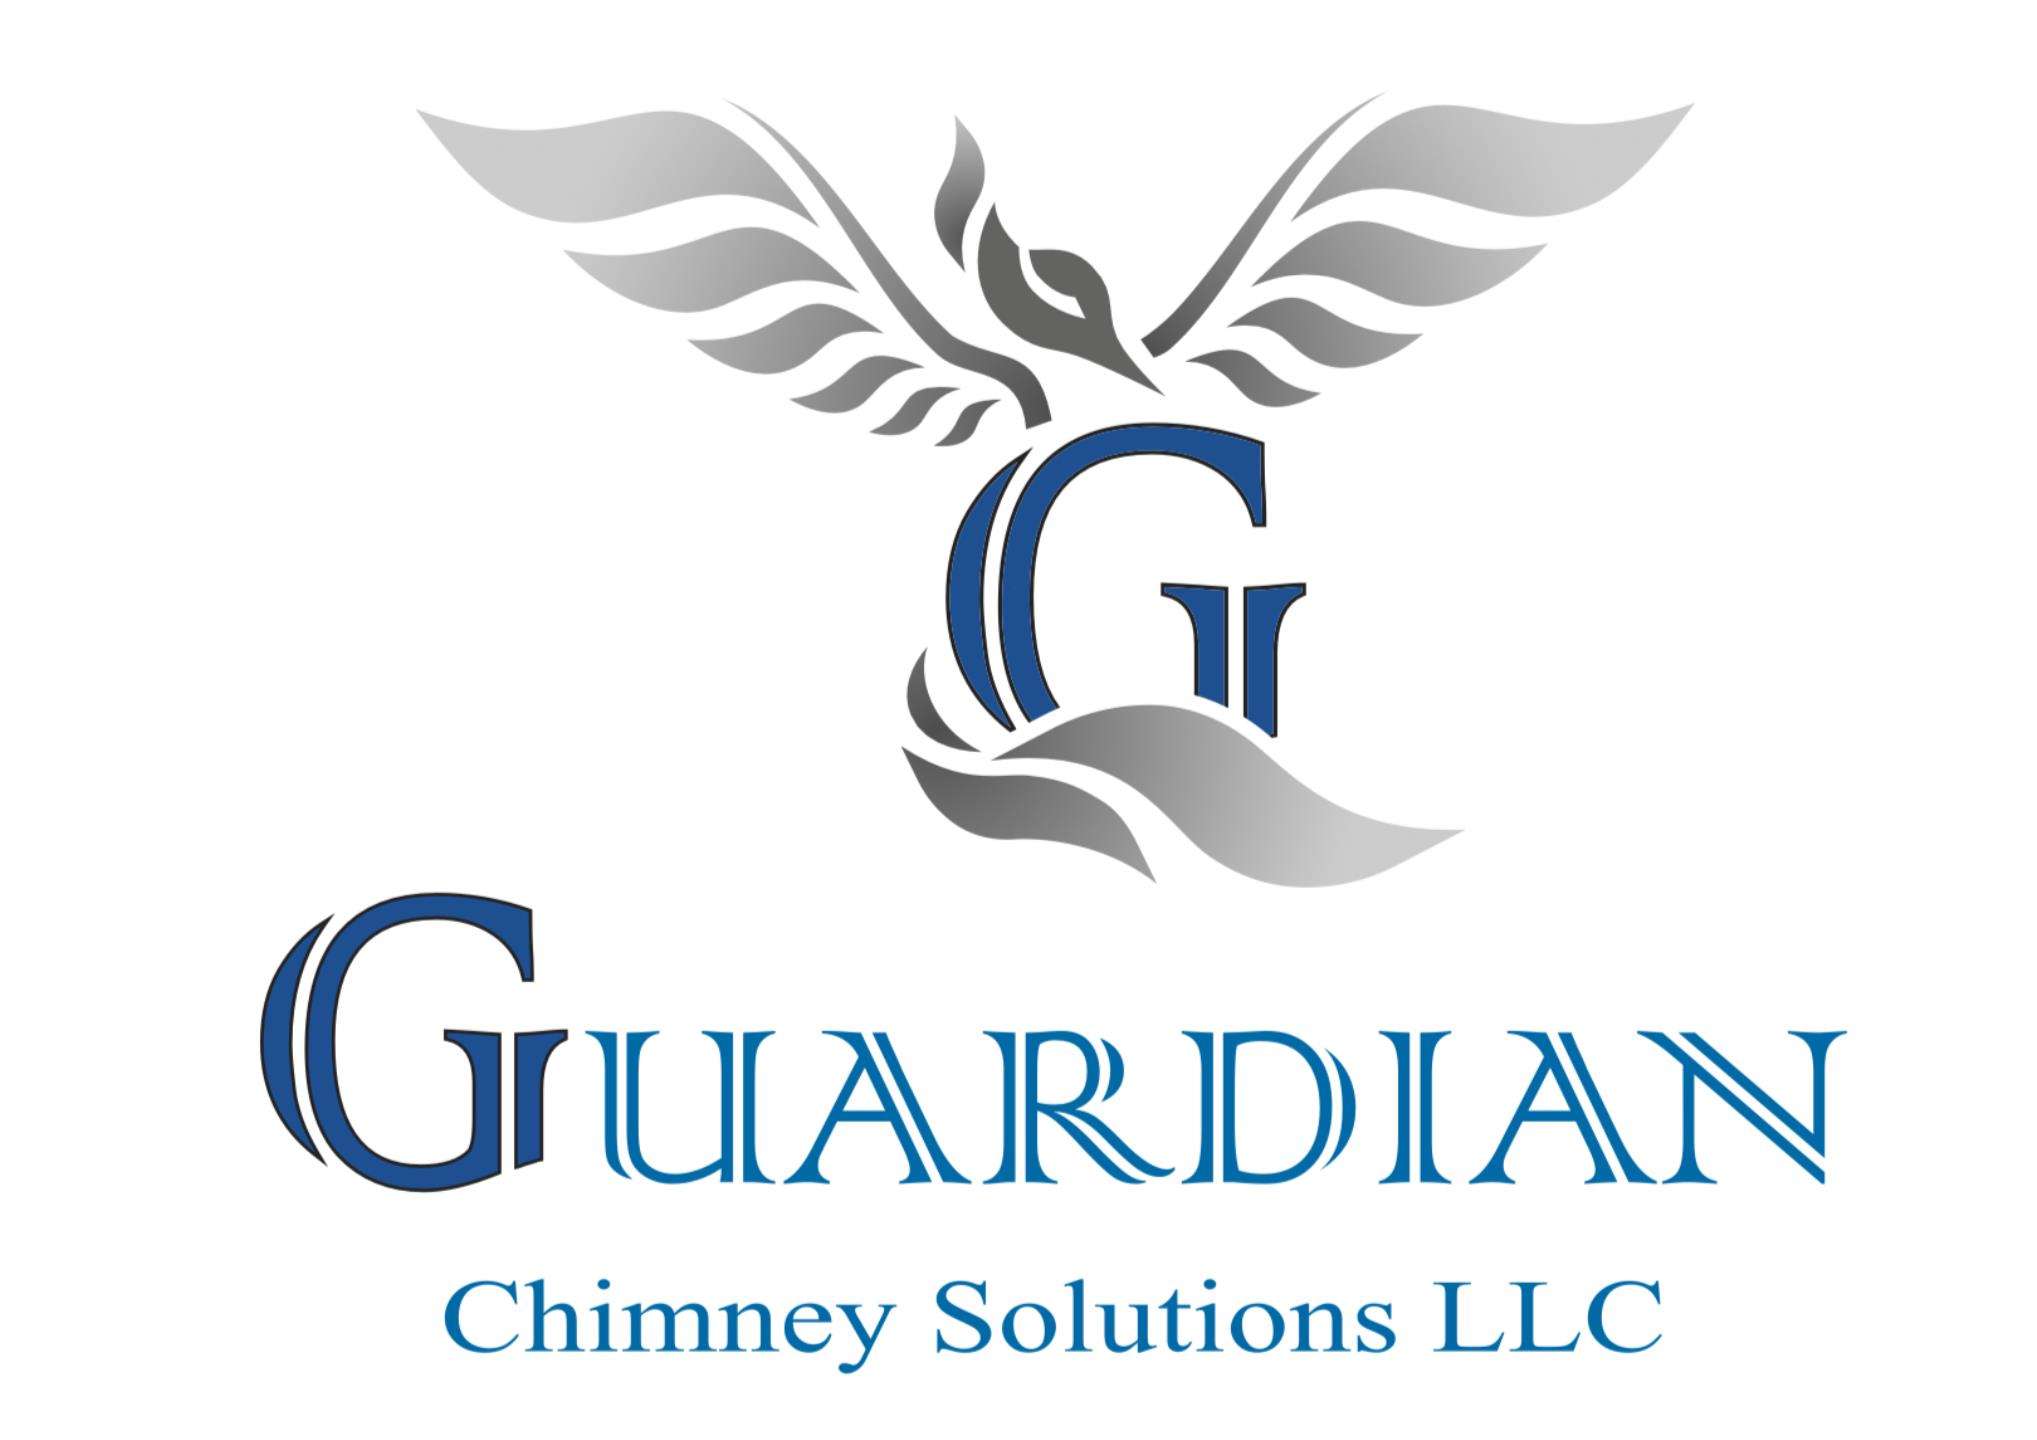 Guardian Chimney Solutions, LLC Logo